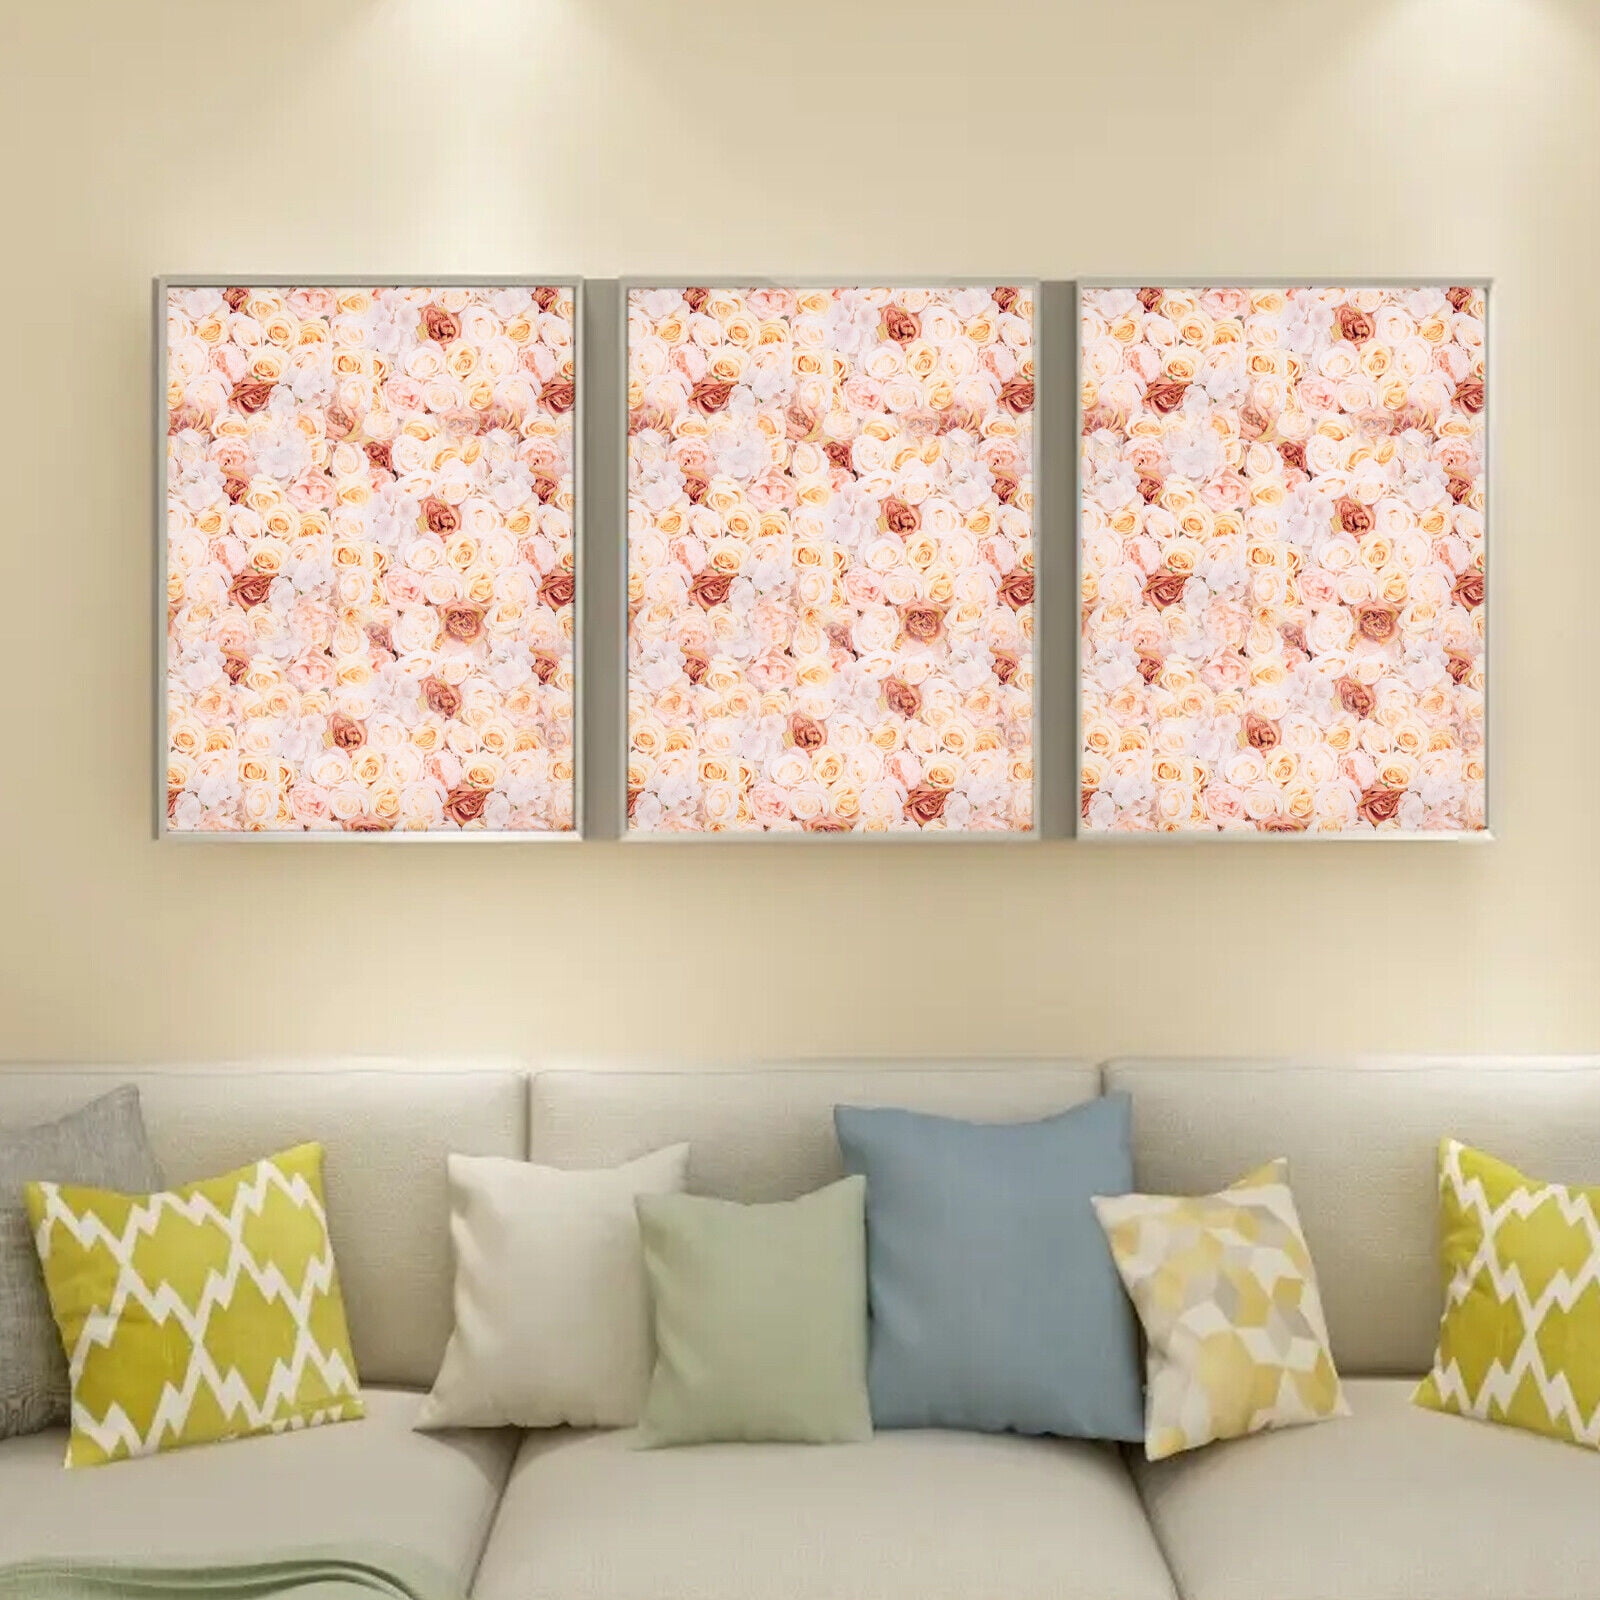  Customer reviews: Flower Wall Panels Backdrop Décor